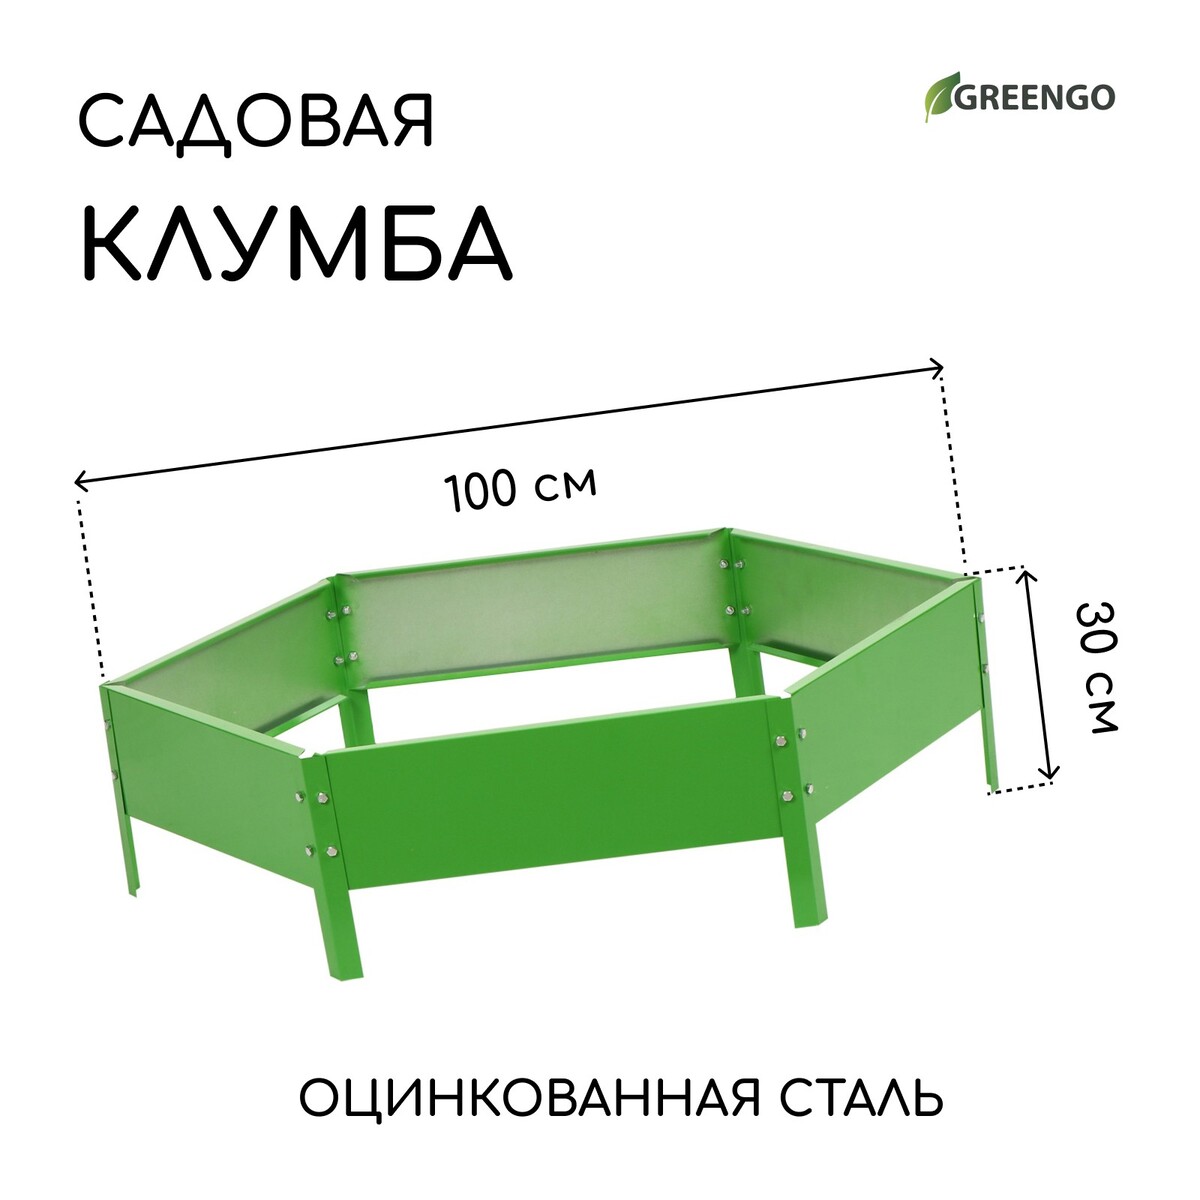 Клумба оцинкованная, d = 100 см, h = 15 см, ярко-зеленая, greengo клумба оцинкованная d 100 см h 15 см коричневая greengo